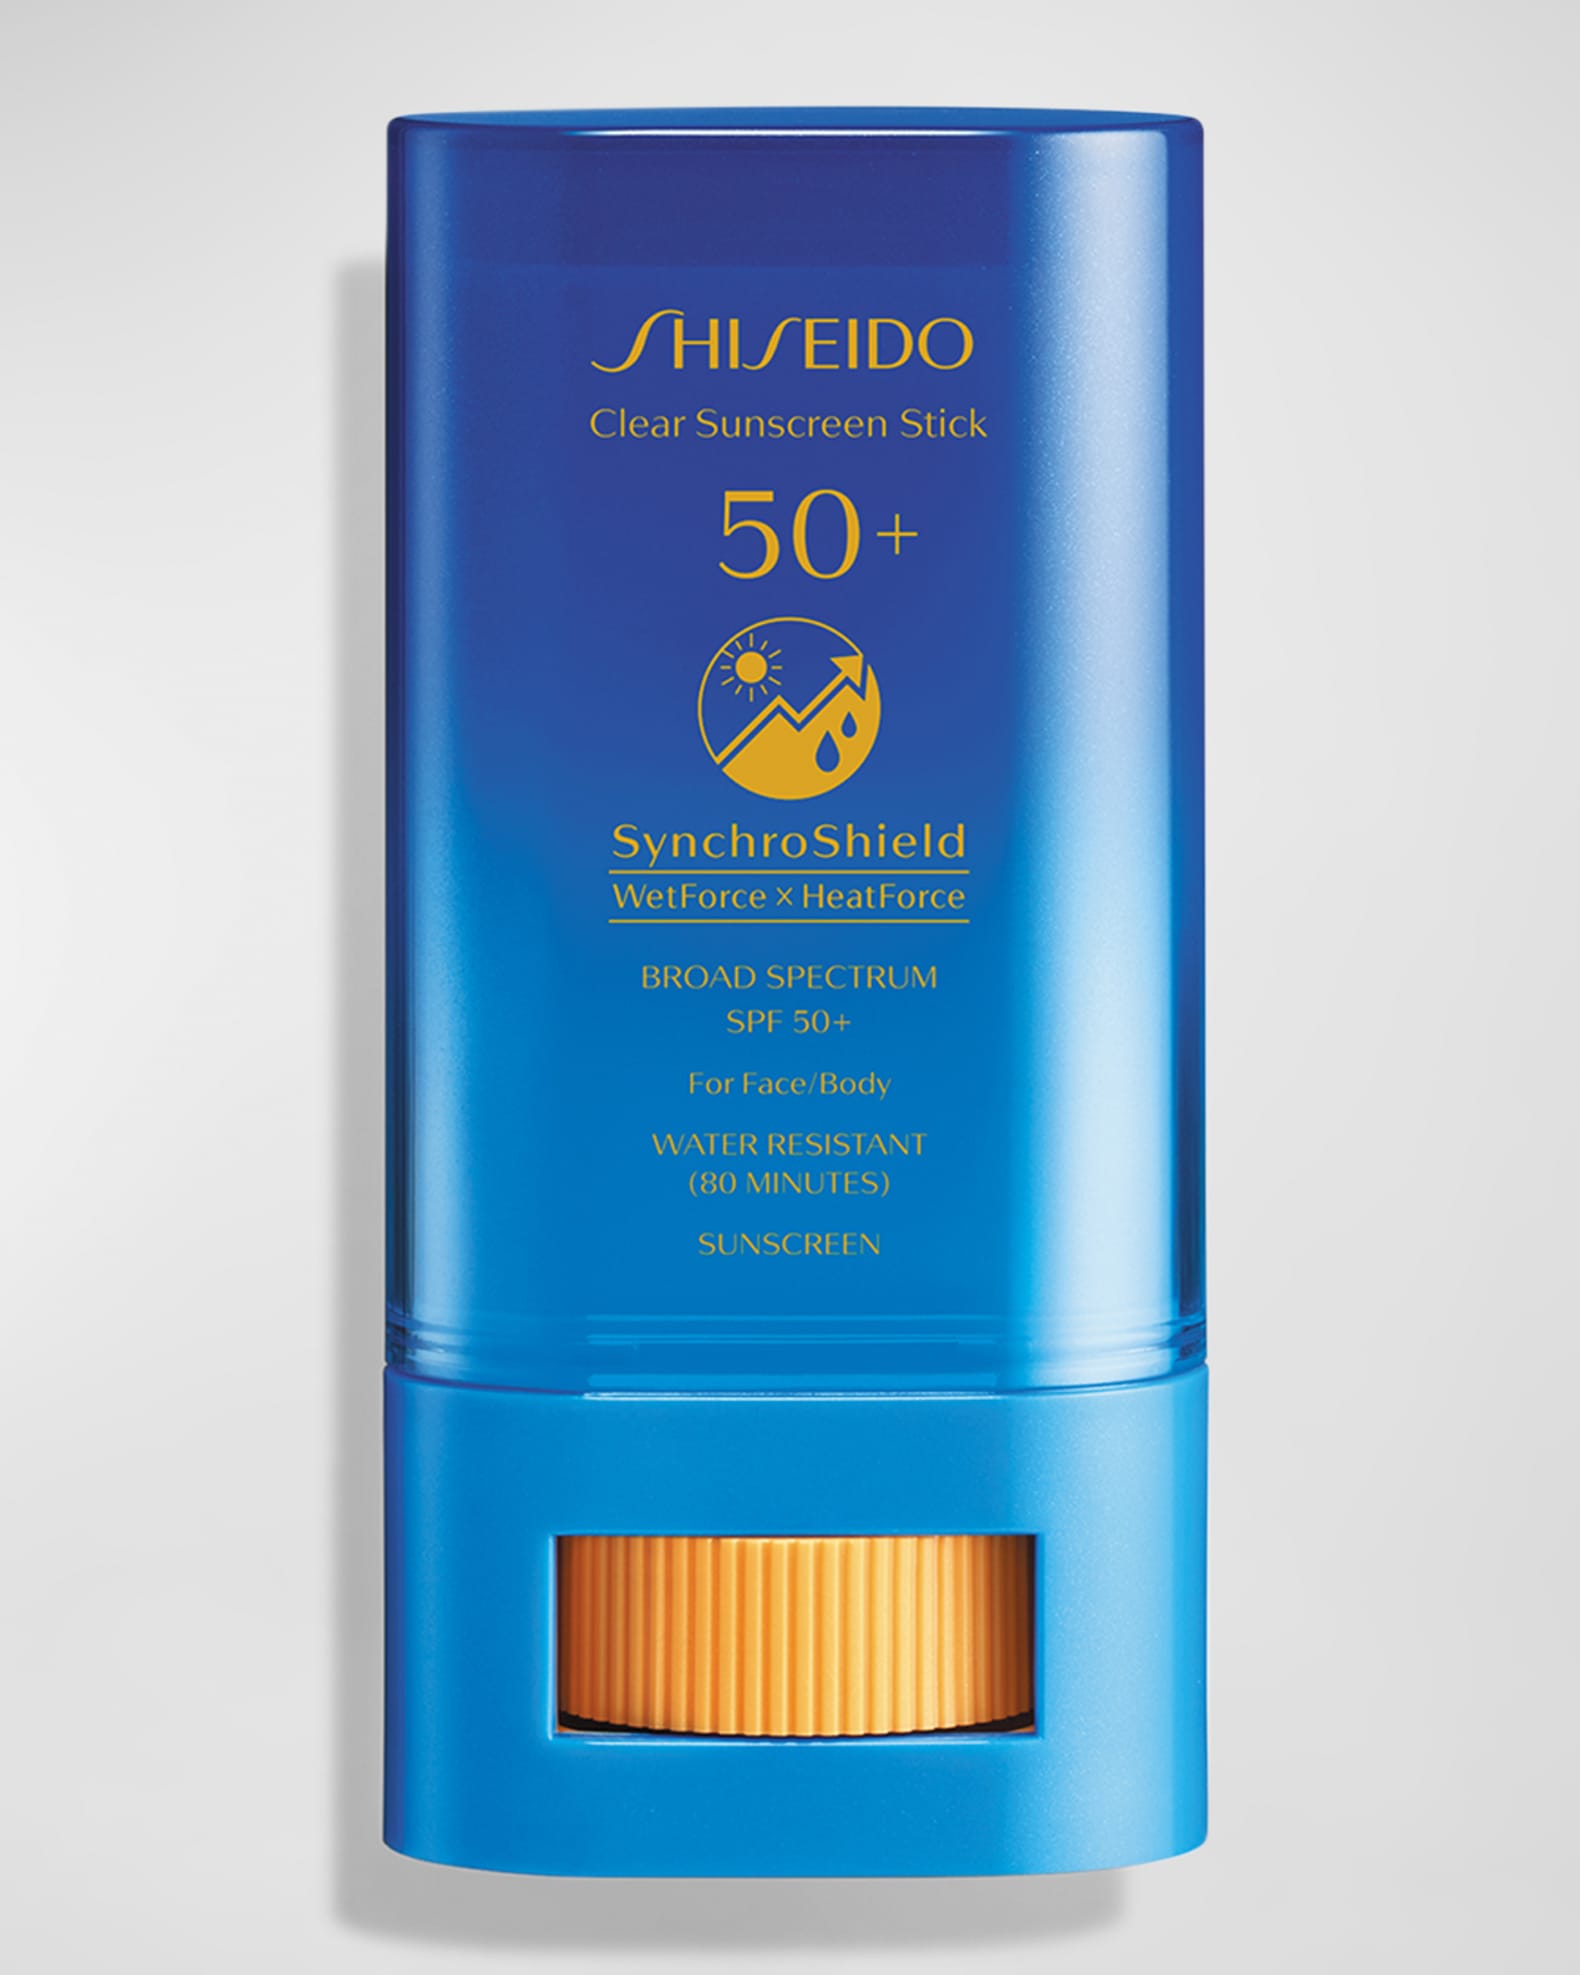 Shiseido Clear Sunscreen Stick SPF 50+ | Neiman Marcus